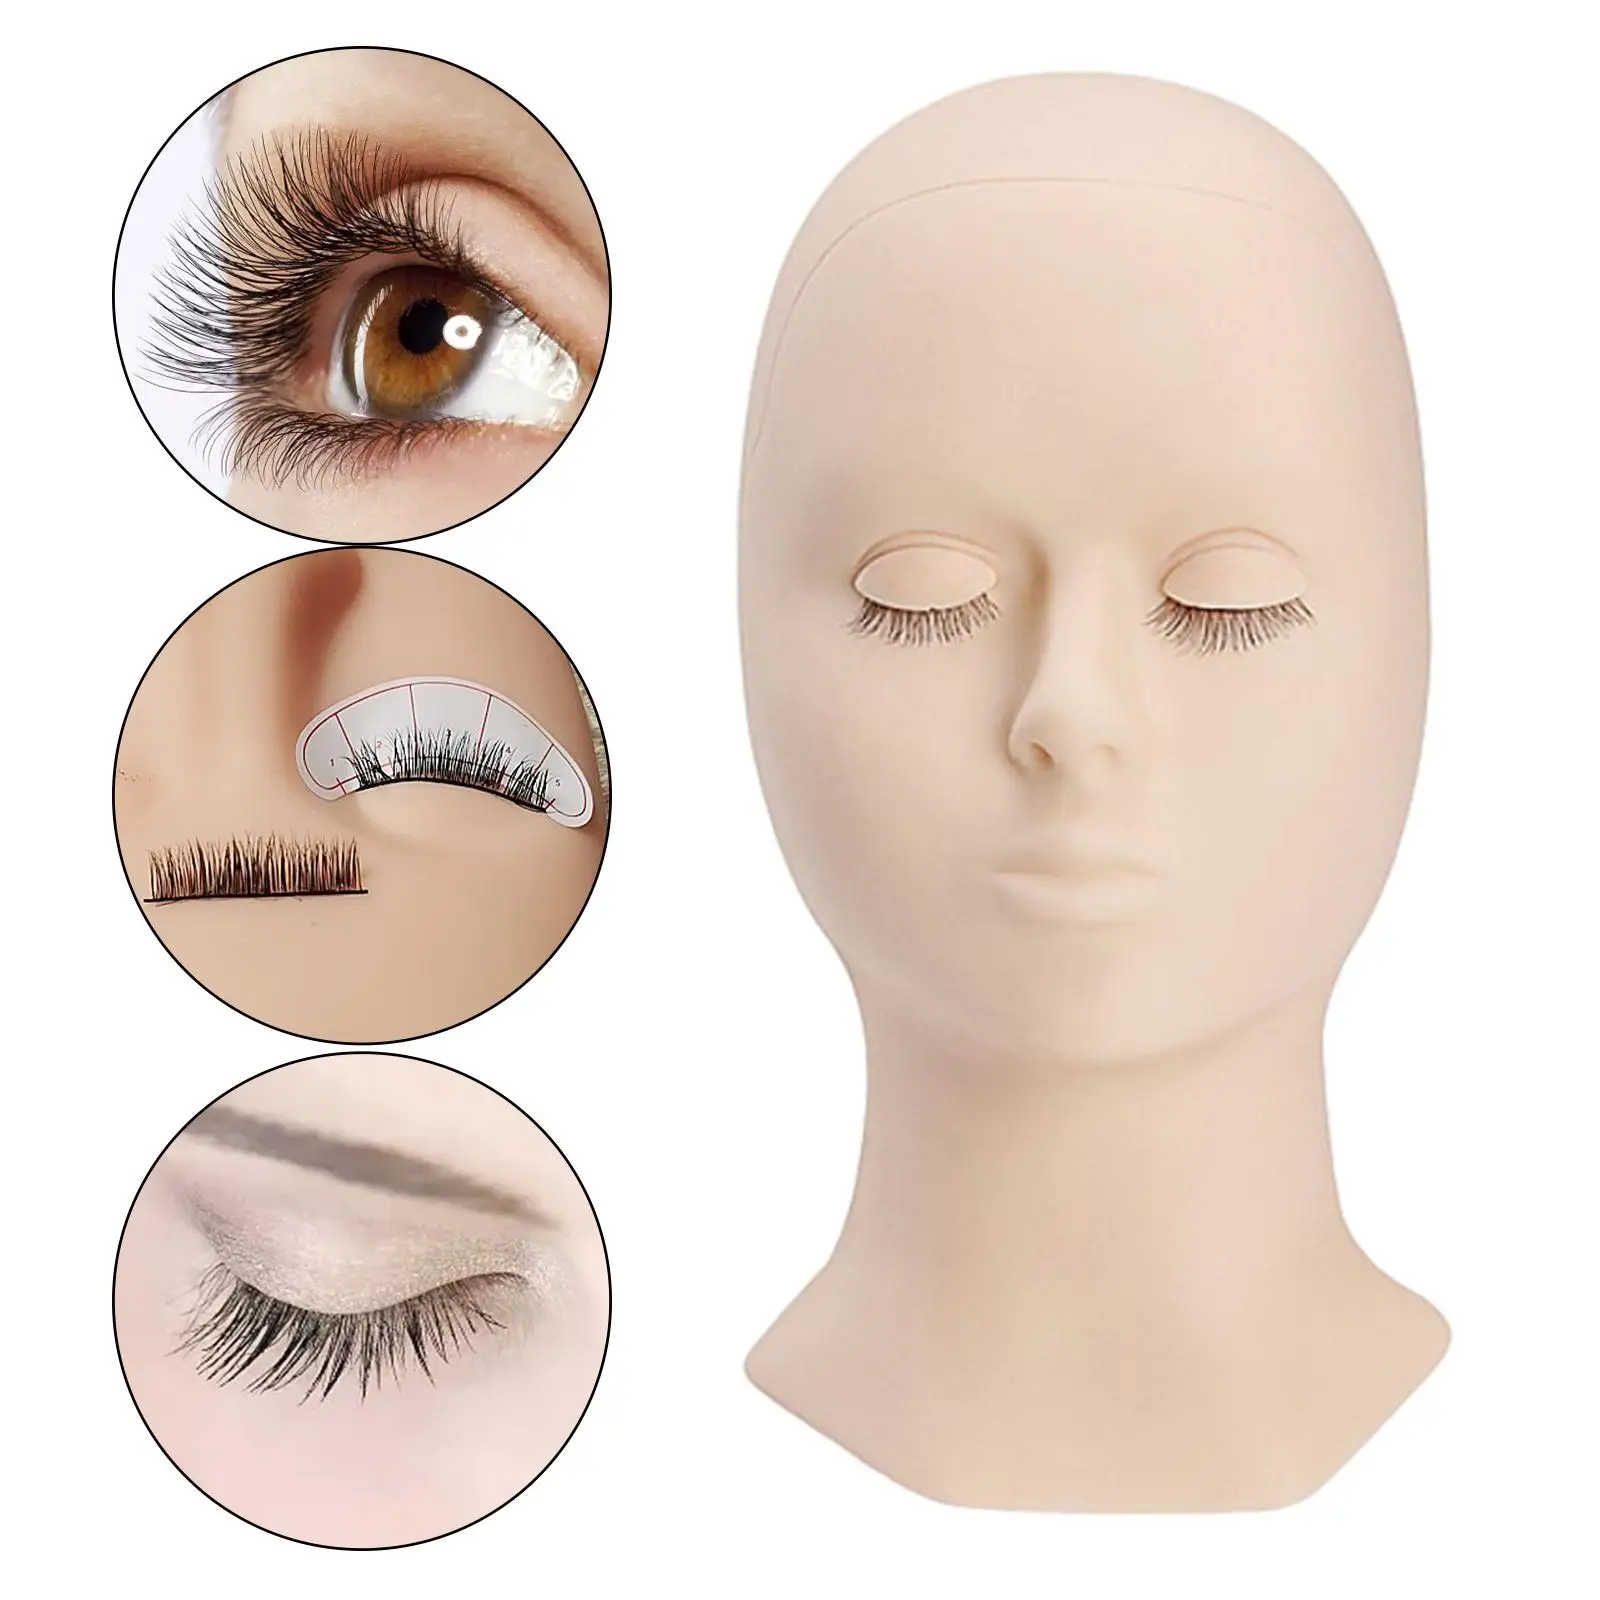 Practice Head Model False Eyelash Extension Replaced Eyelids for Training